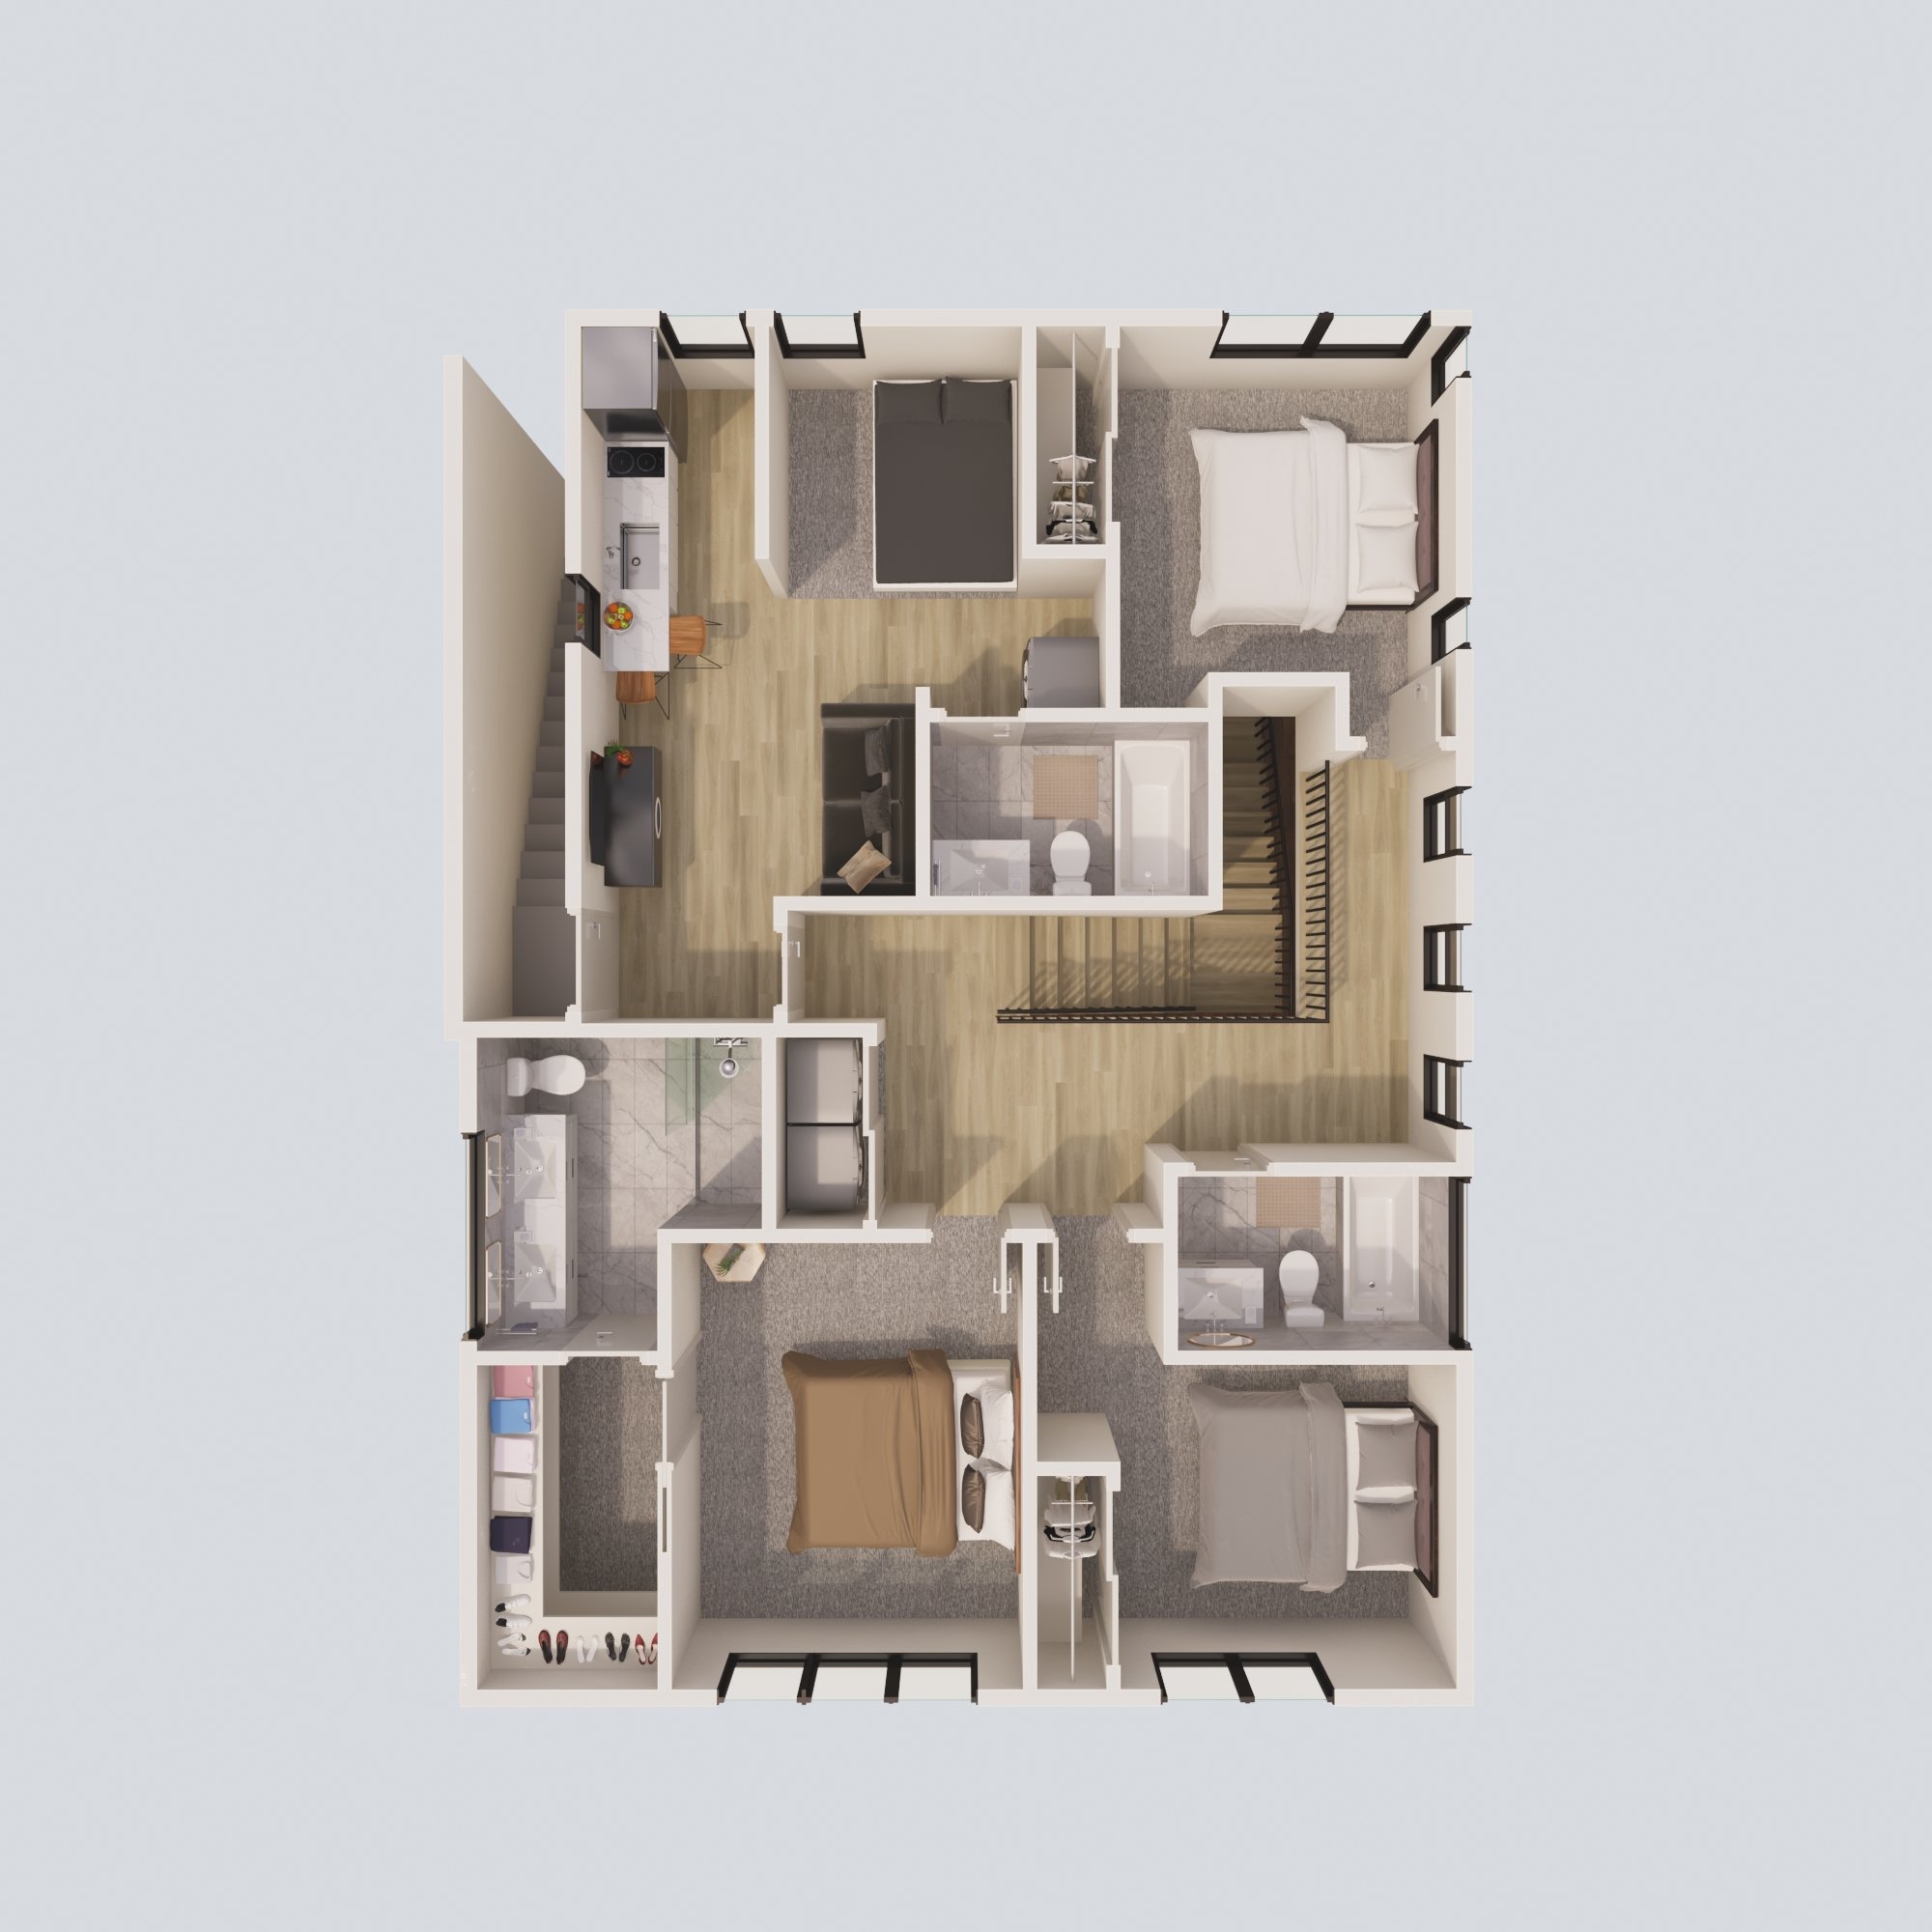 Plan A1 - Second Floor